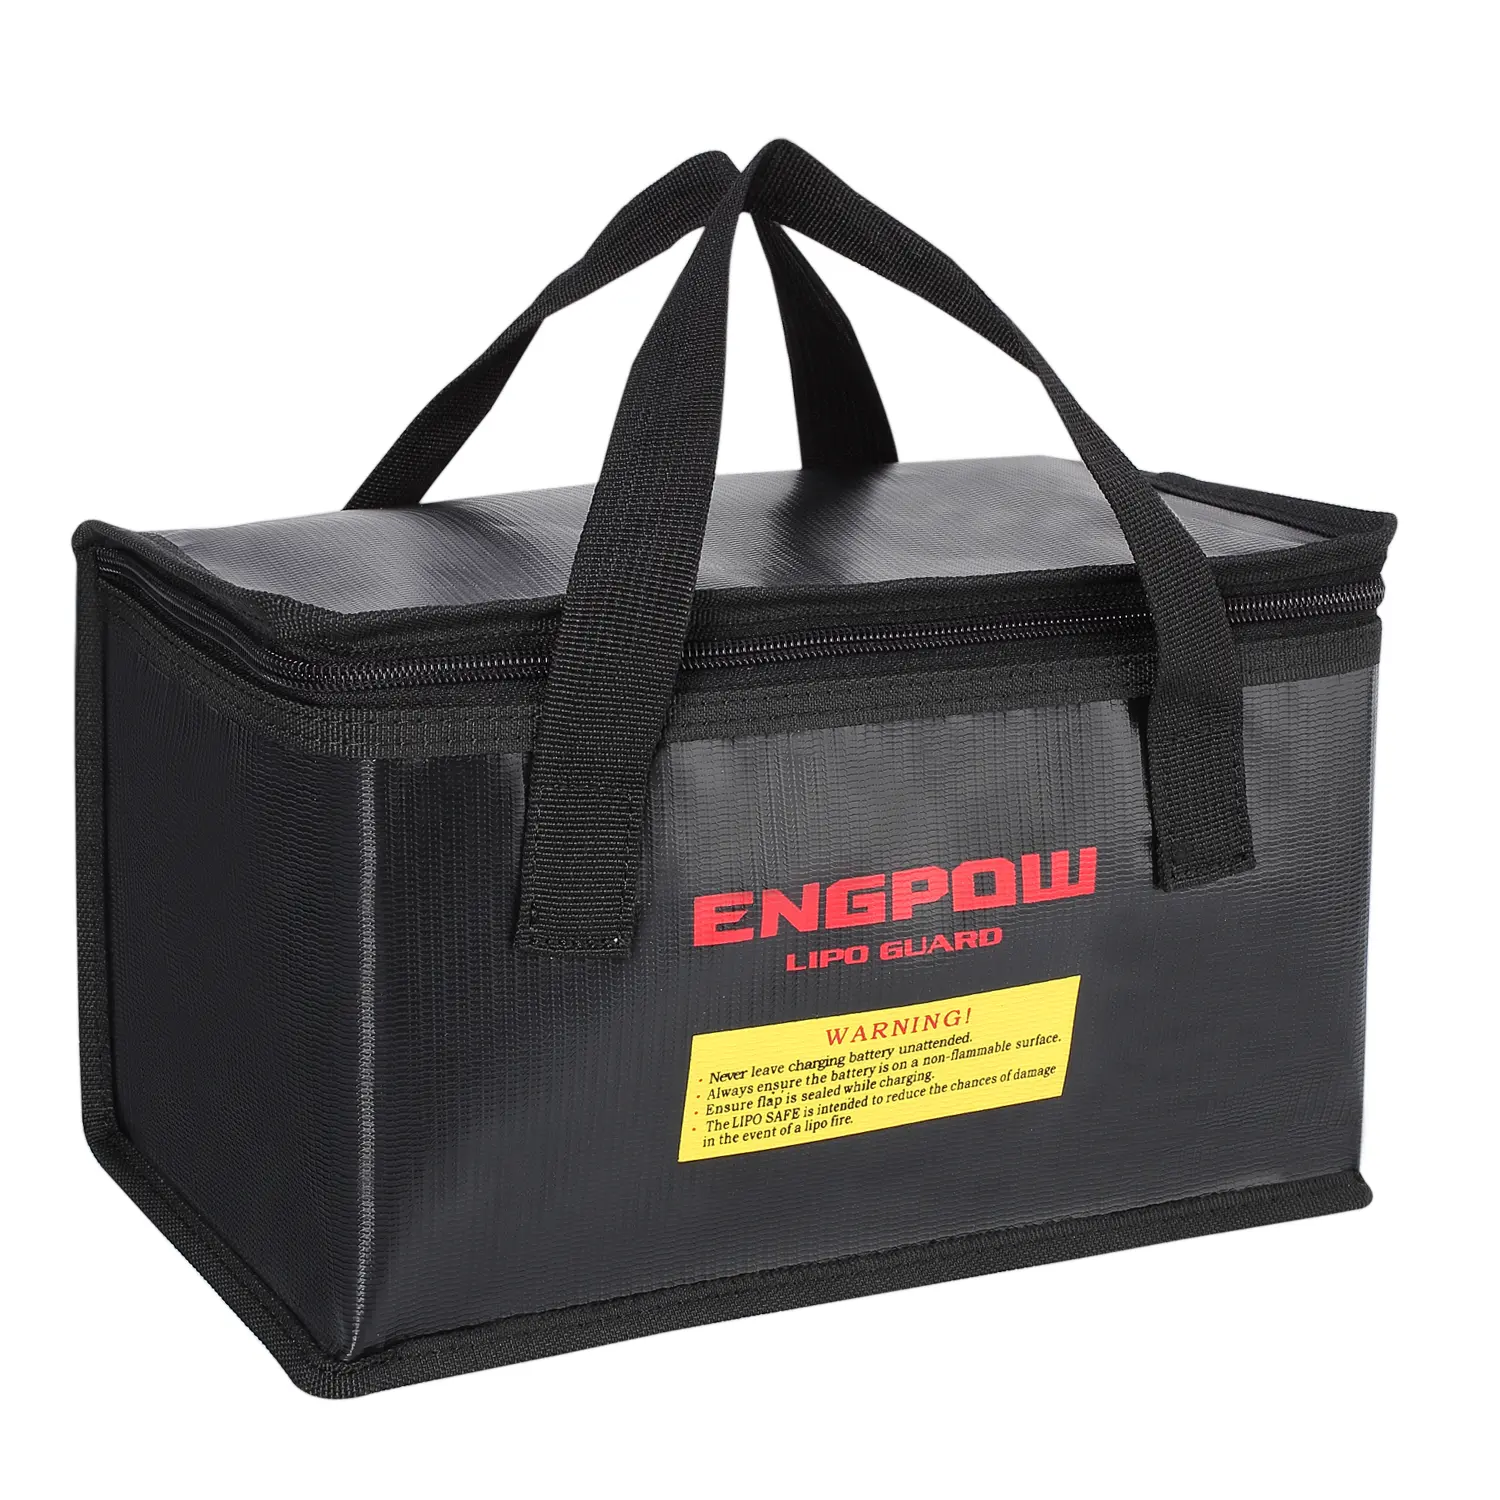 Lipo safe safety charge battery bag portable handbag custom fireproof explosion-proof waterproof storage bag